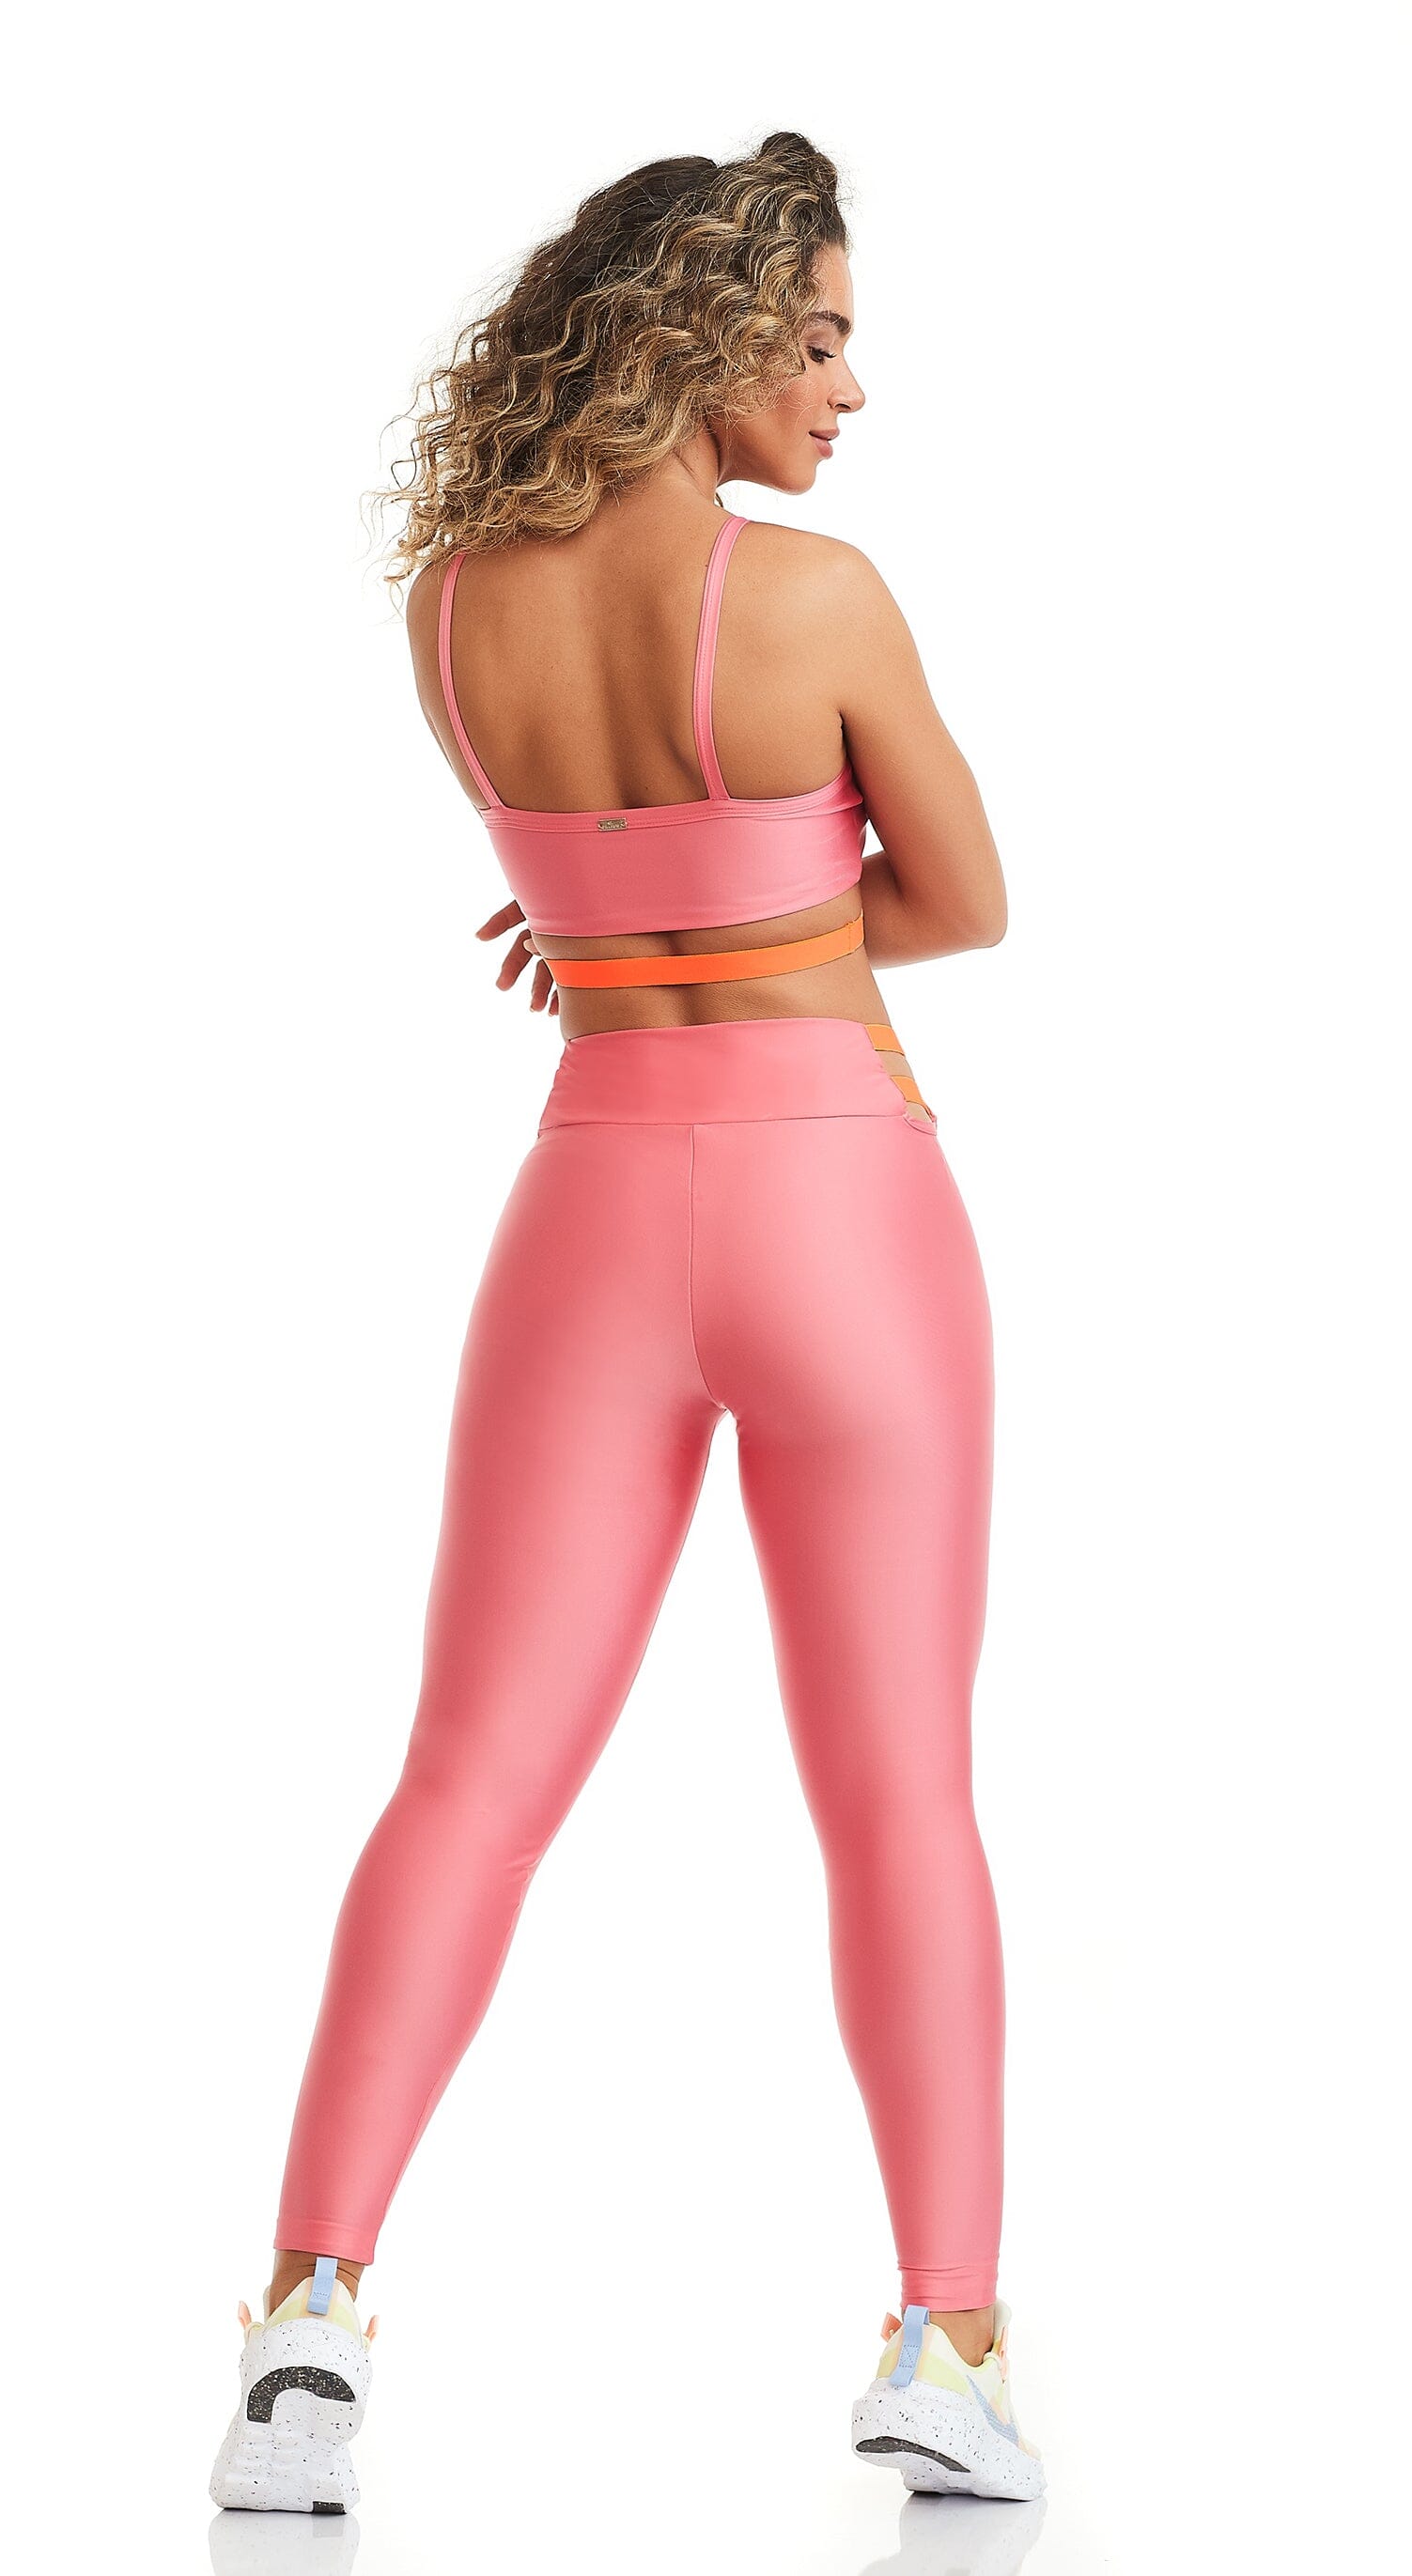 Atletika Fashion Top - Pop Pink